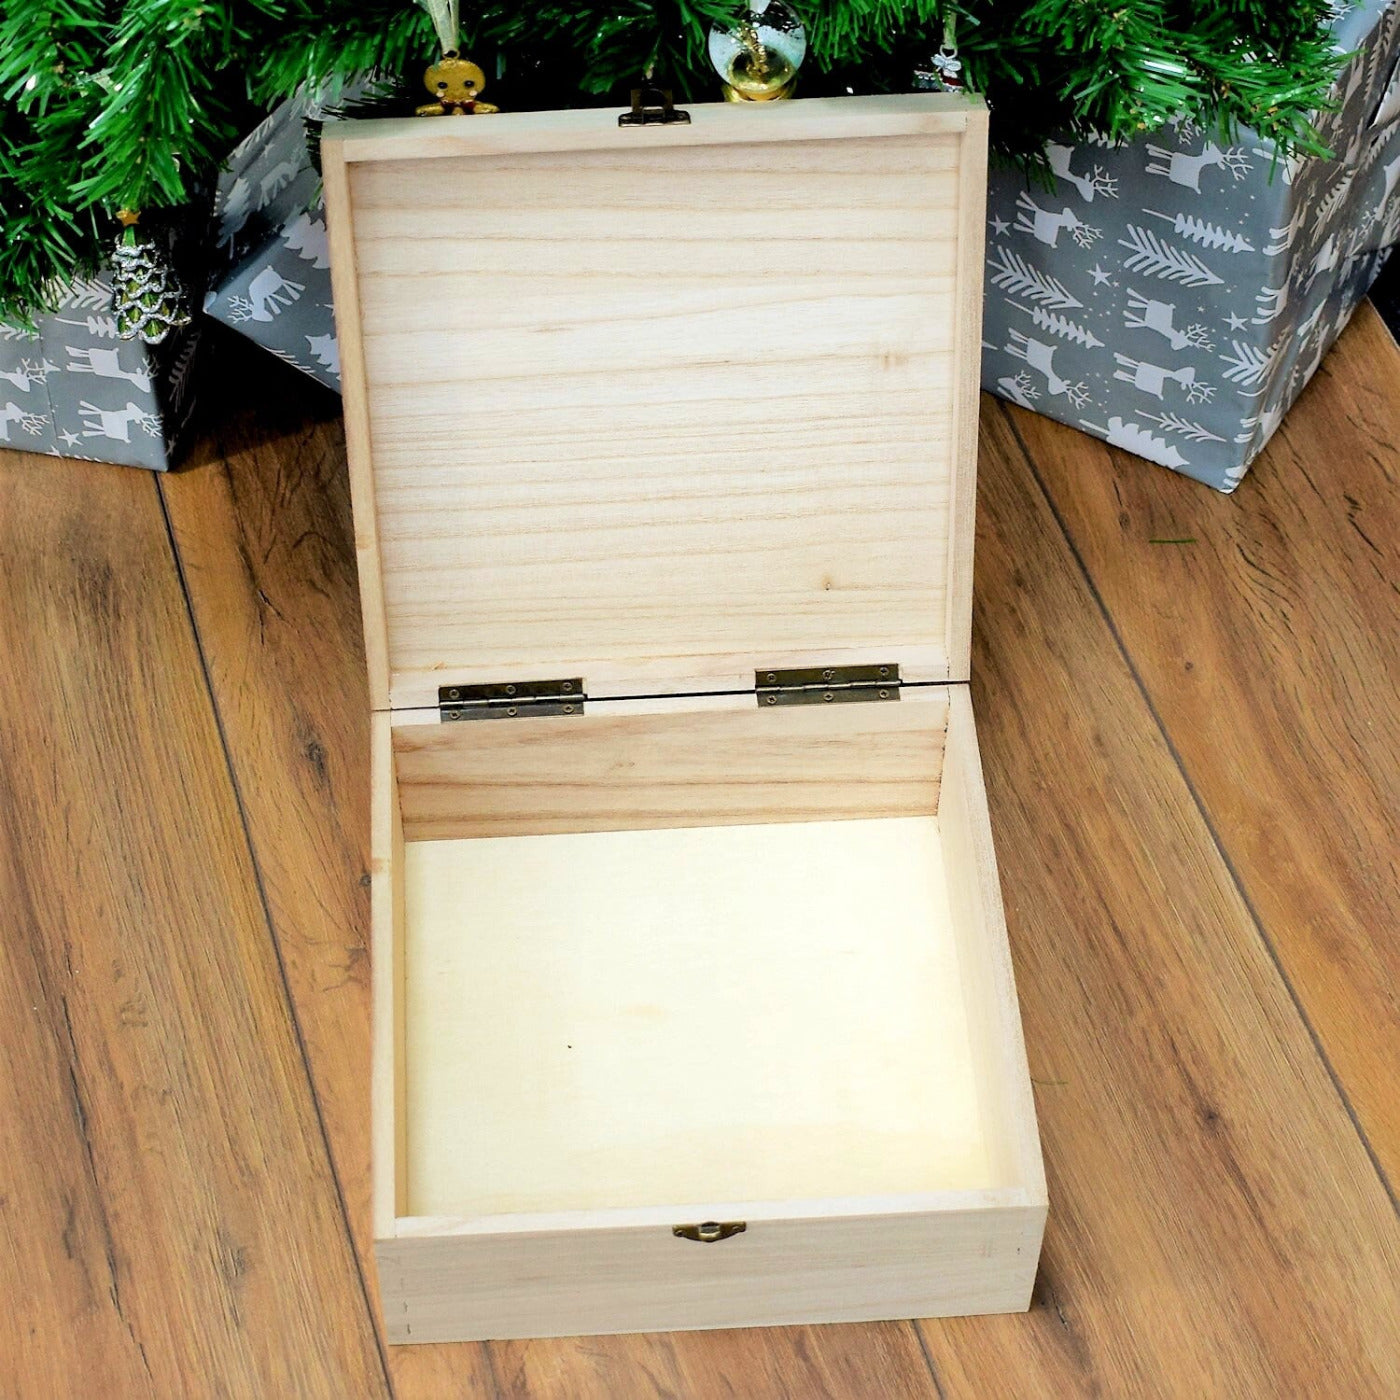 Personalised, Engraved Wooden Christmas Eve Box - Santa Sleigh